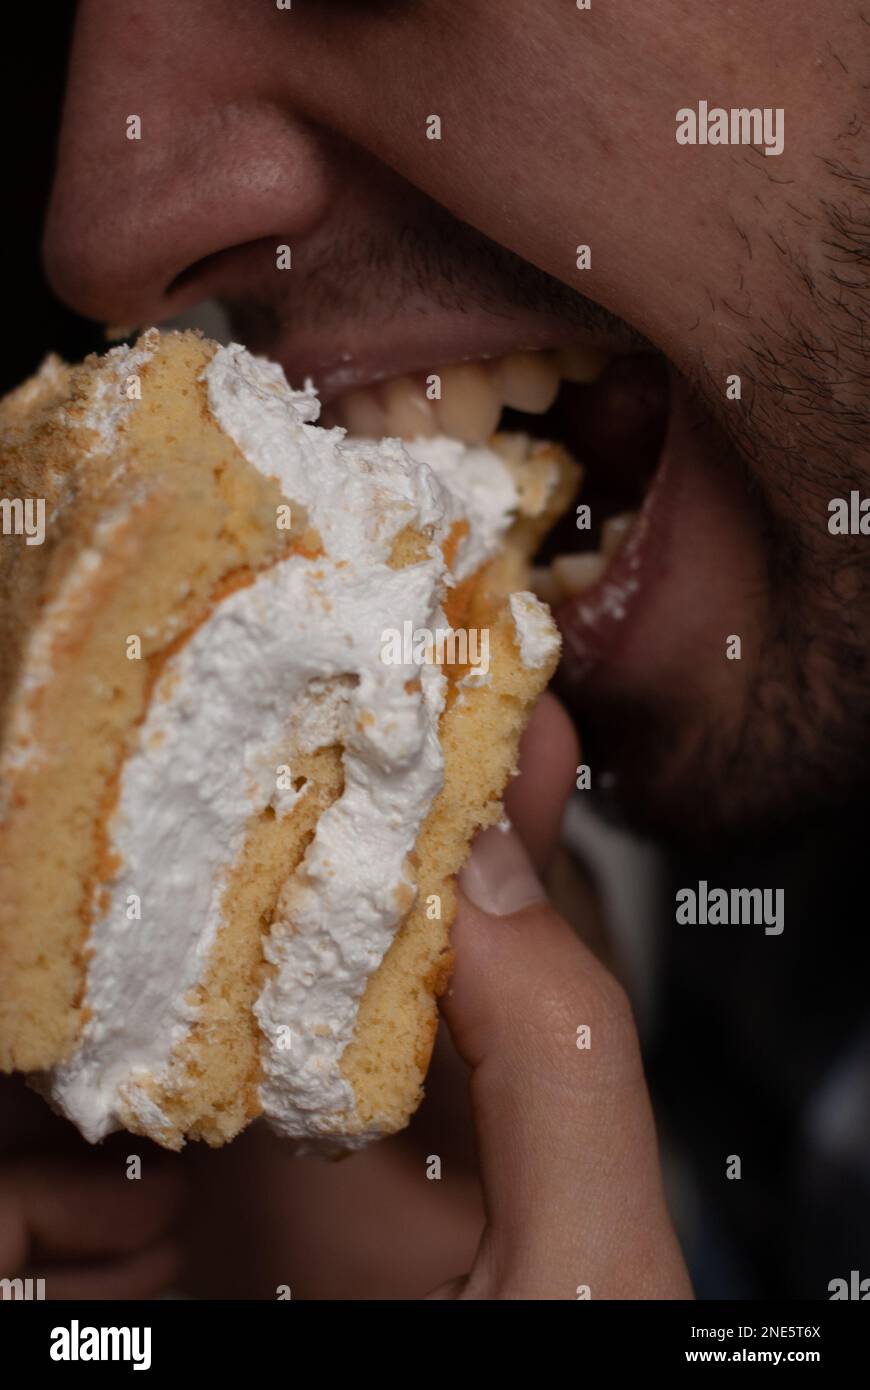 Man is biting piece of lemon cake Stock Photo